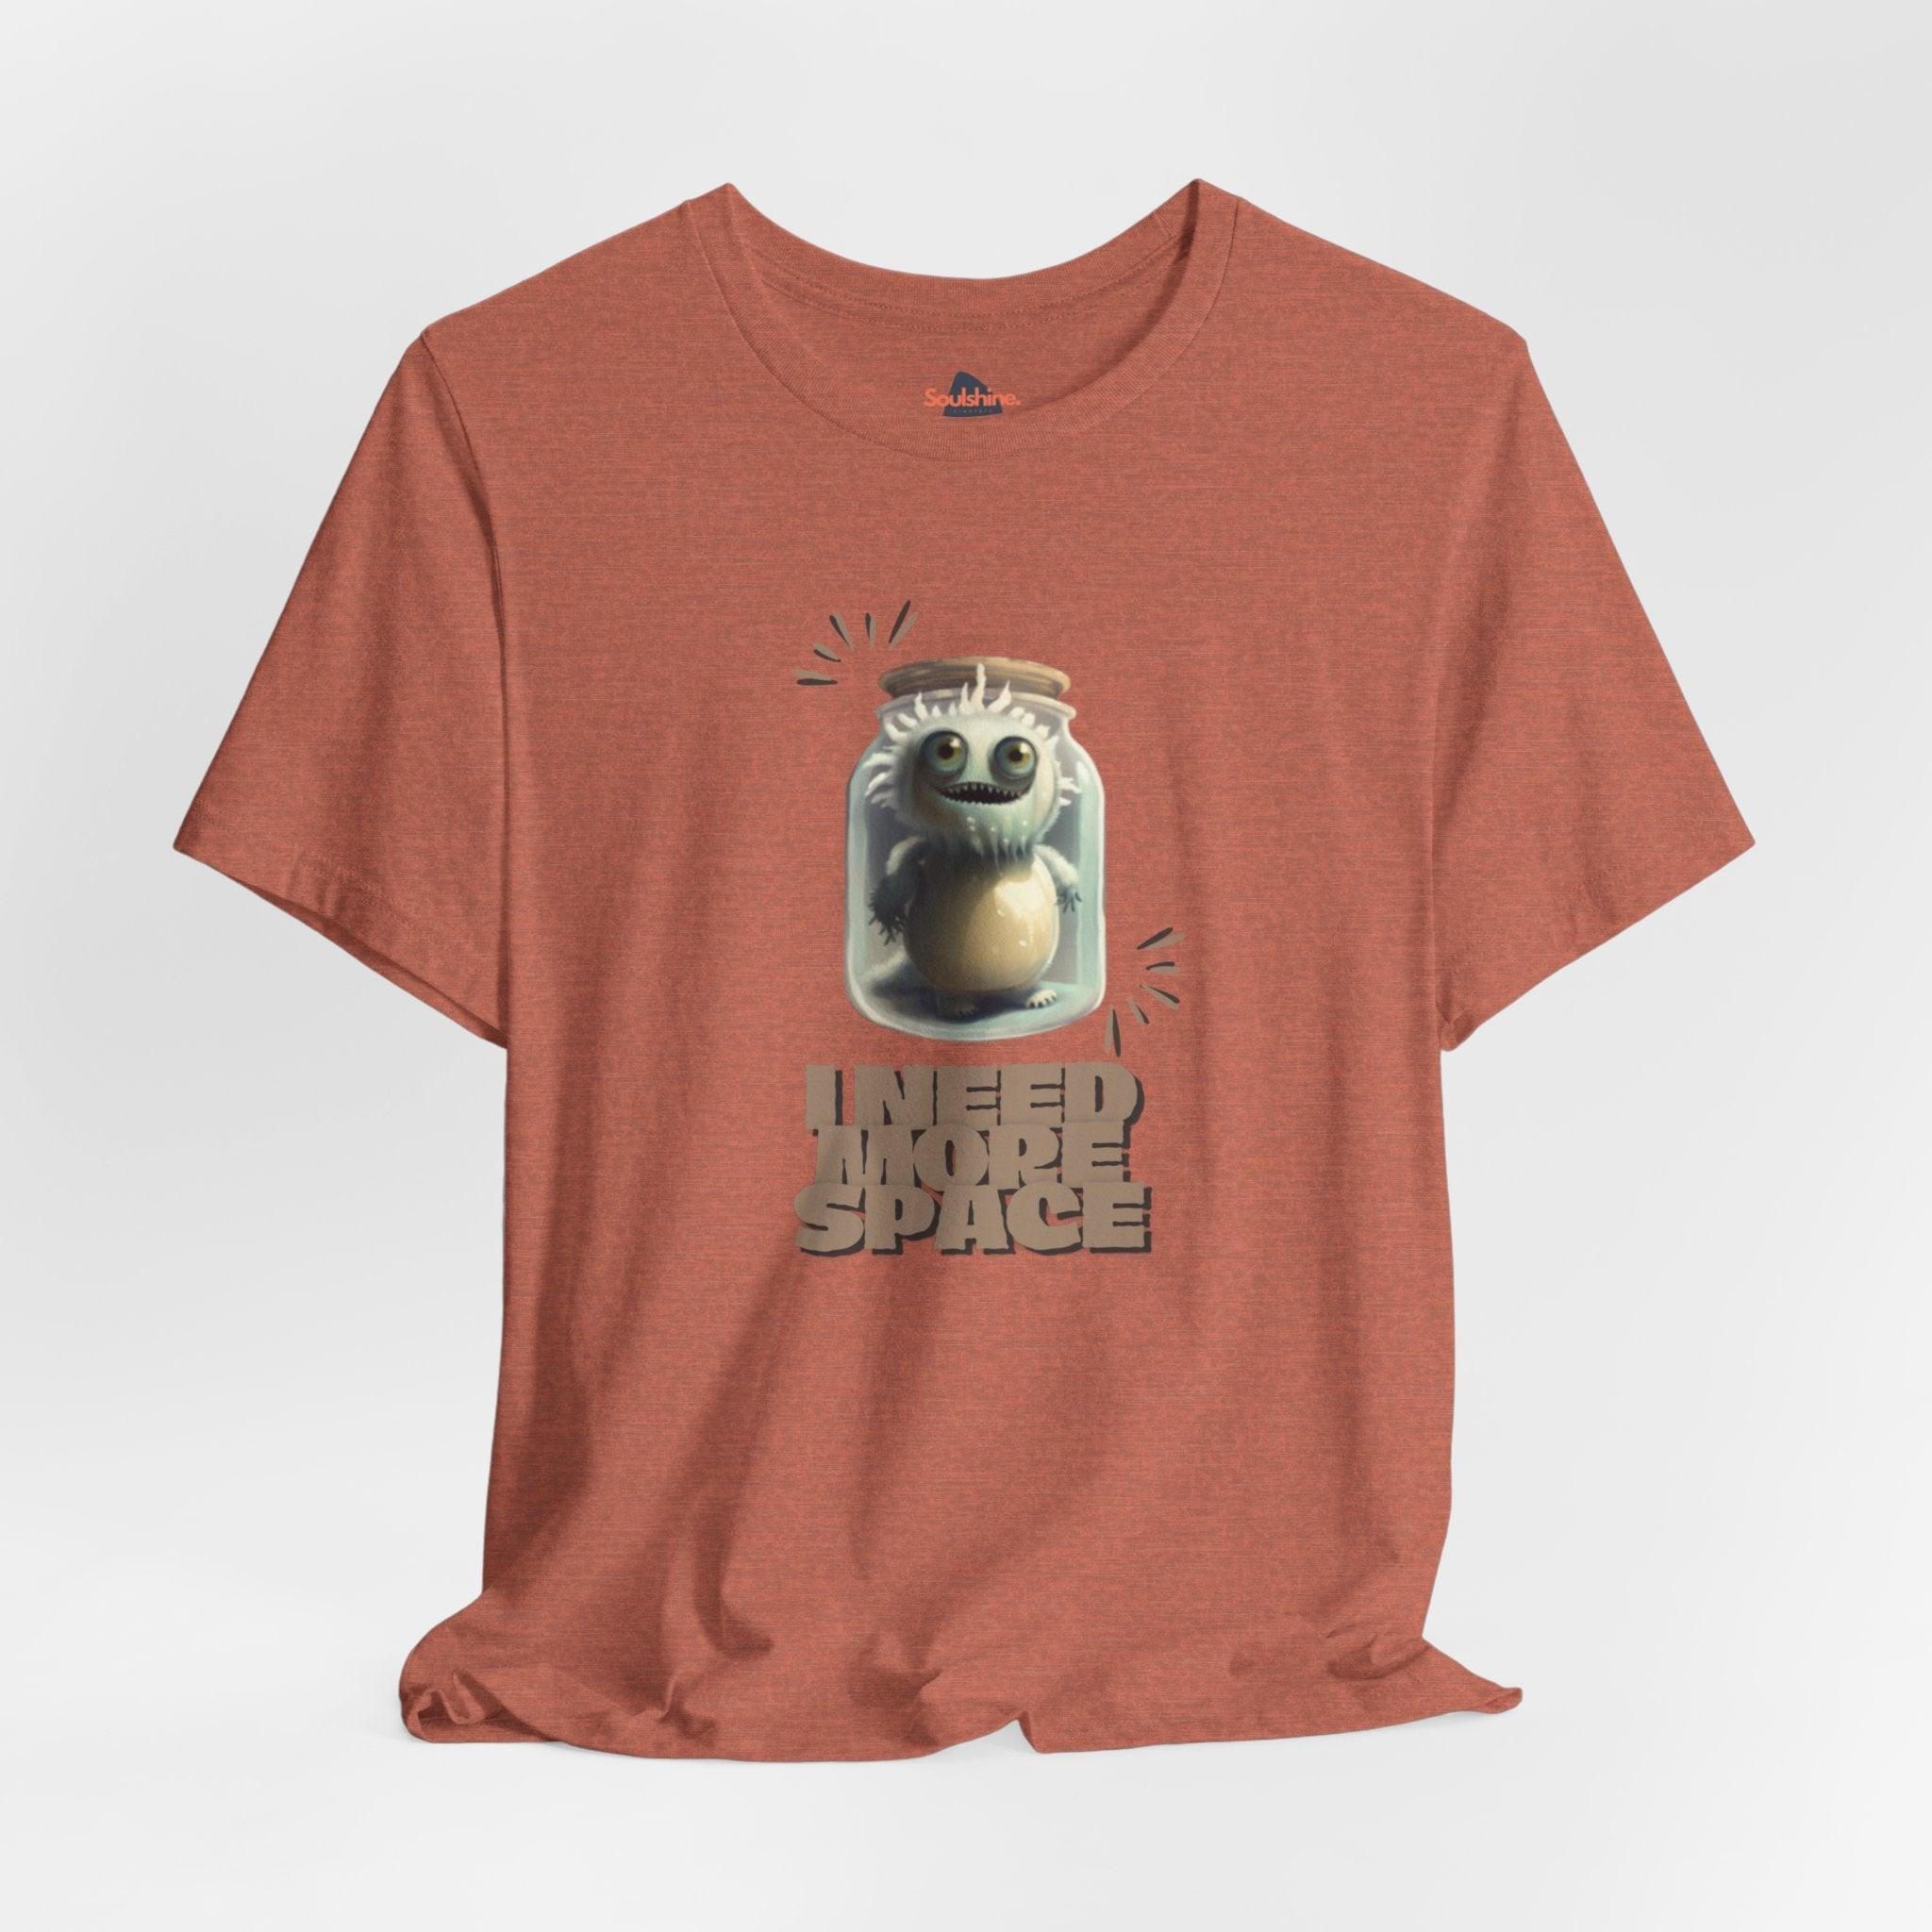 I need more space - Funny T-Shirt - Unisex Jersey Short Sleeve Tee - US Heather Clay S T-Shirt by Soulshinecreators | Soulshinecreators